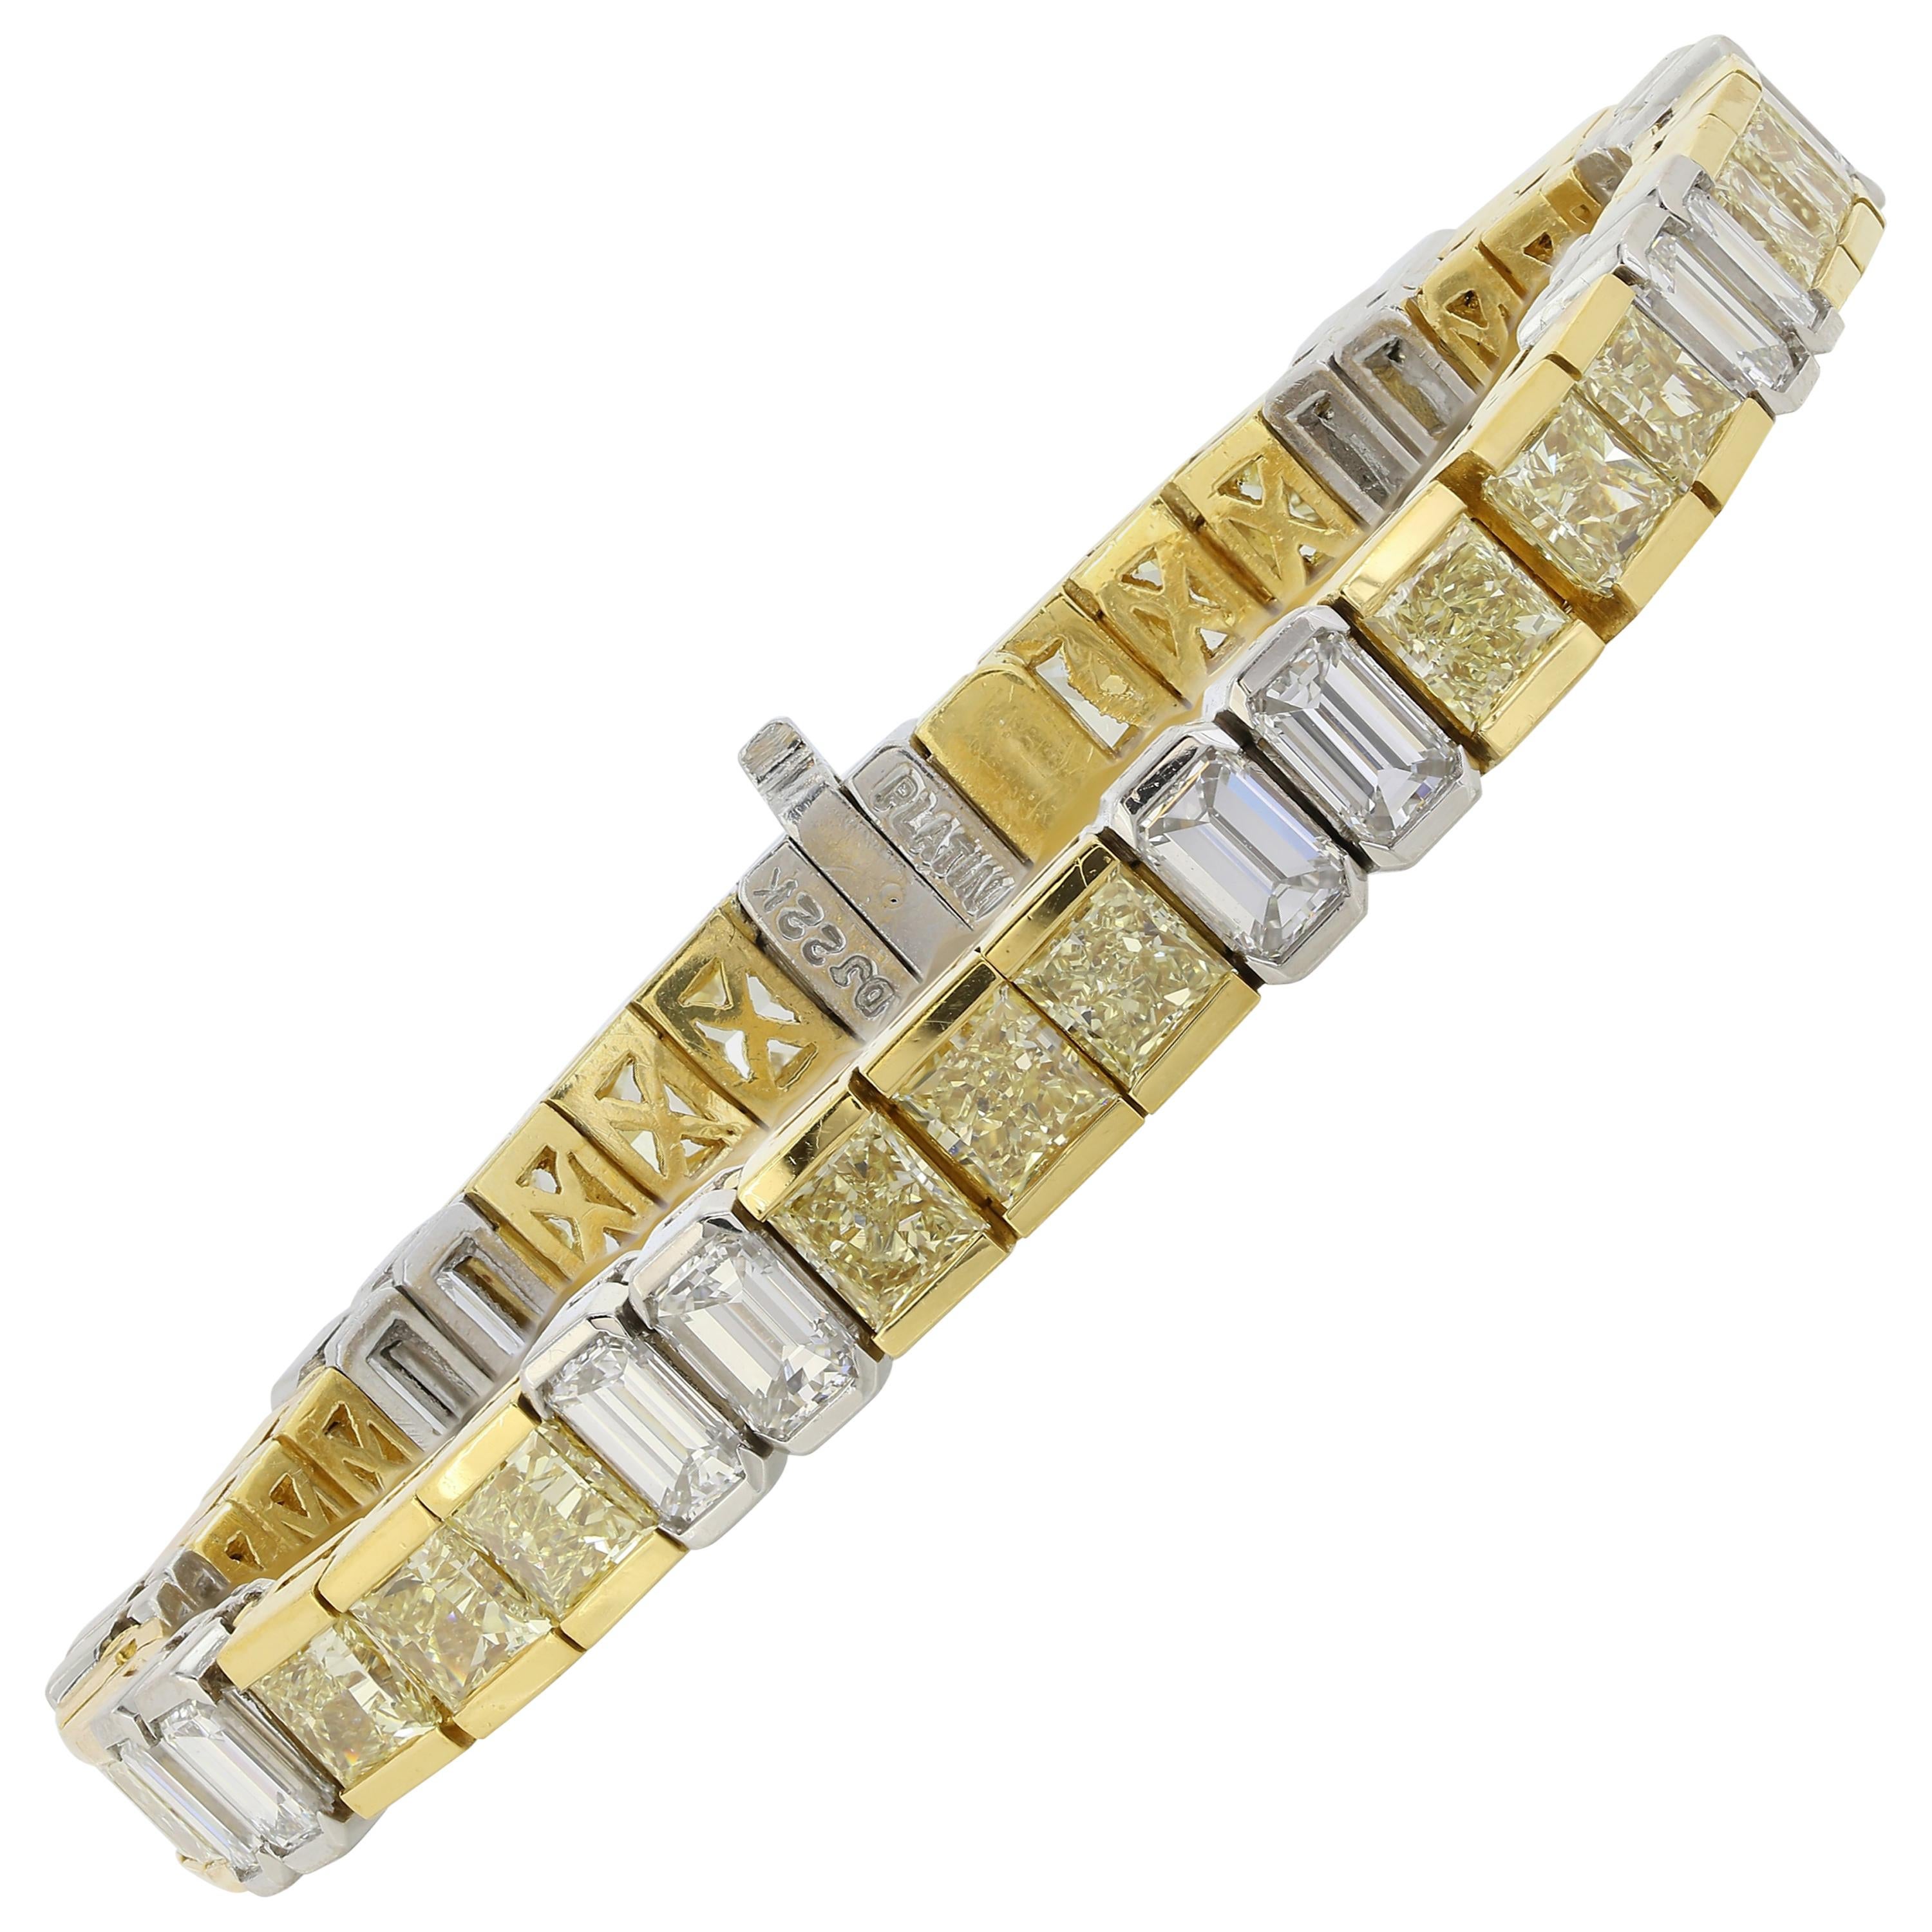 Two-Tone 13.00 Carat Fancy Intense Yellow Radiant Cut Diamond Bracelet For Sale